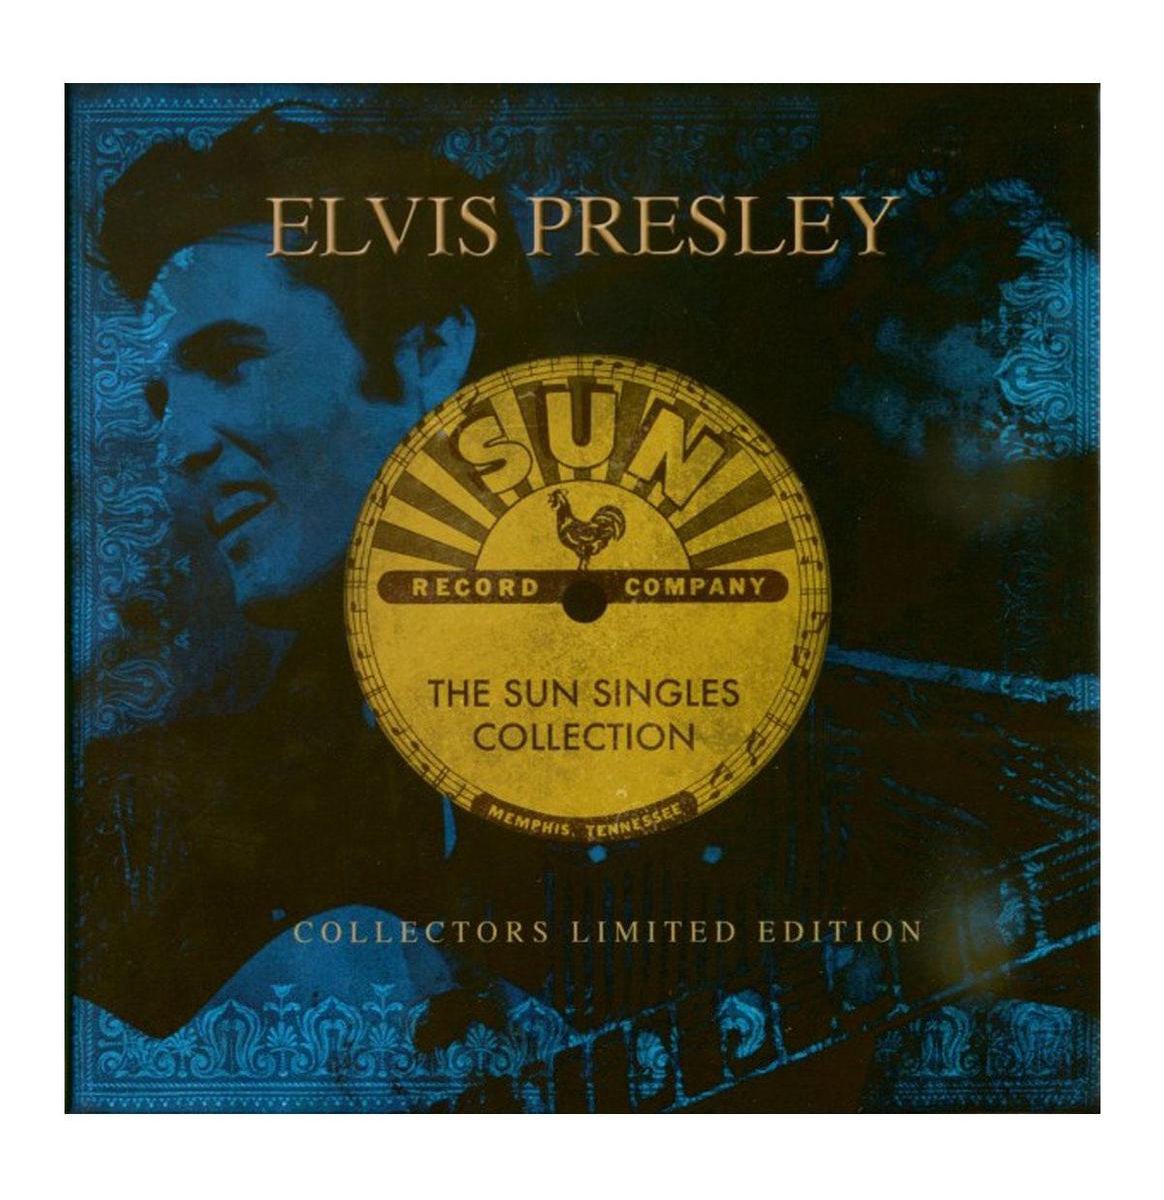 Sun Singles Collection Collectors Limited Edition, Elvis Presley